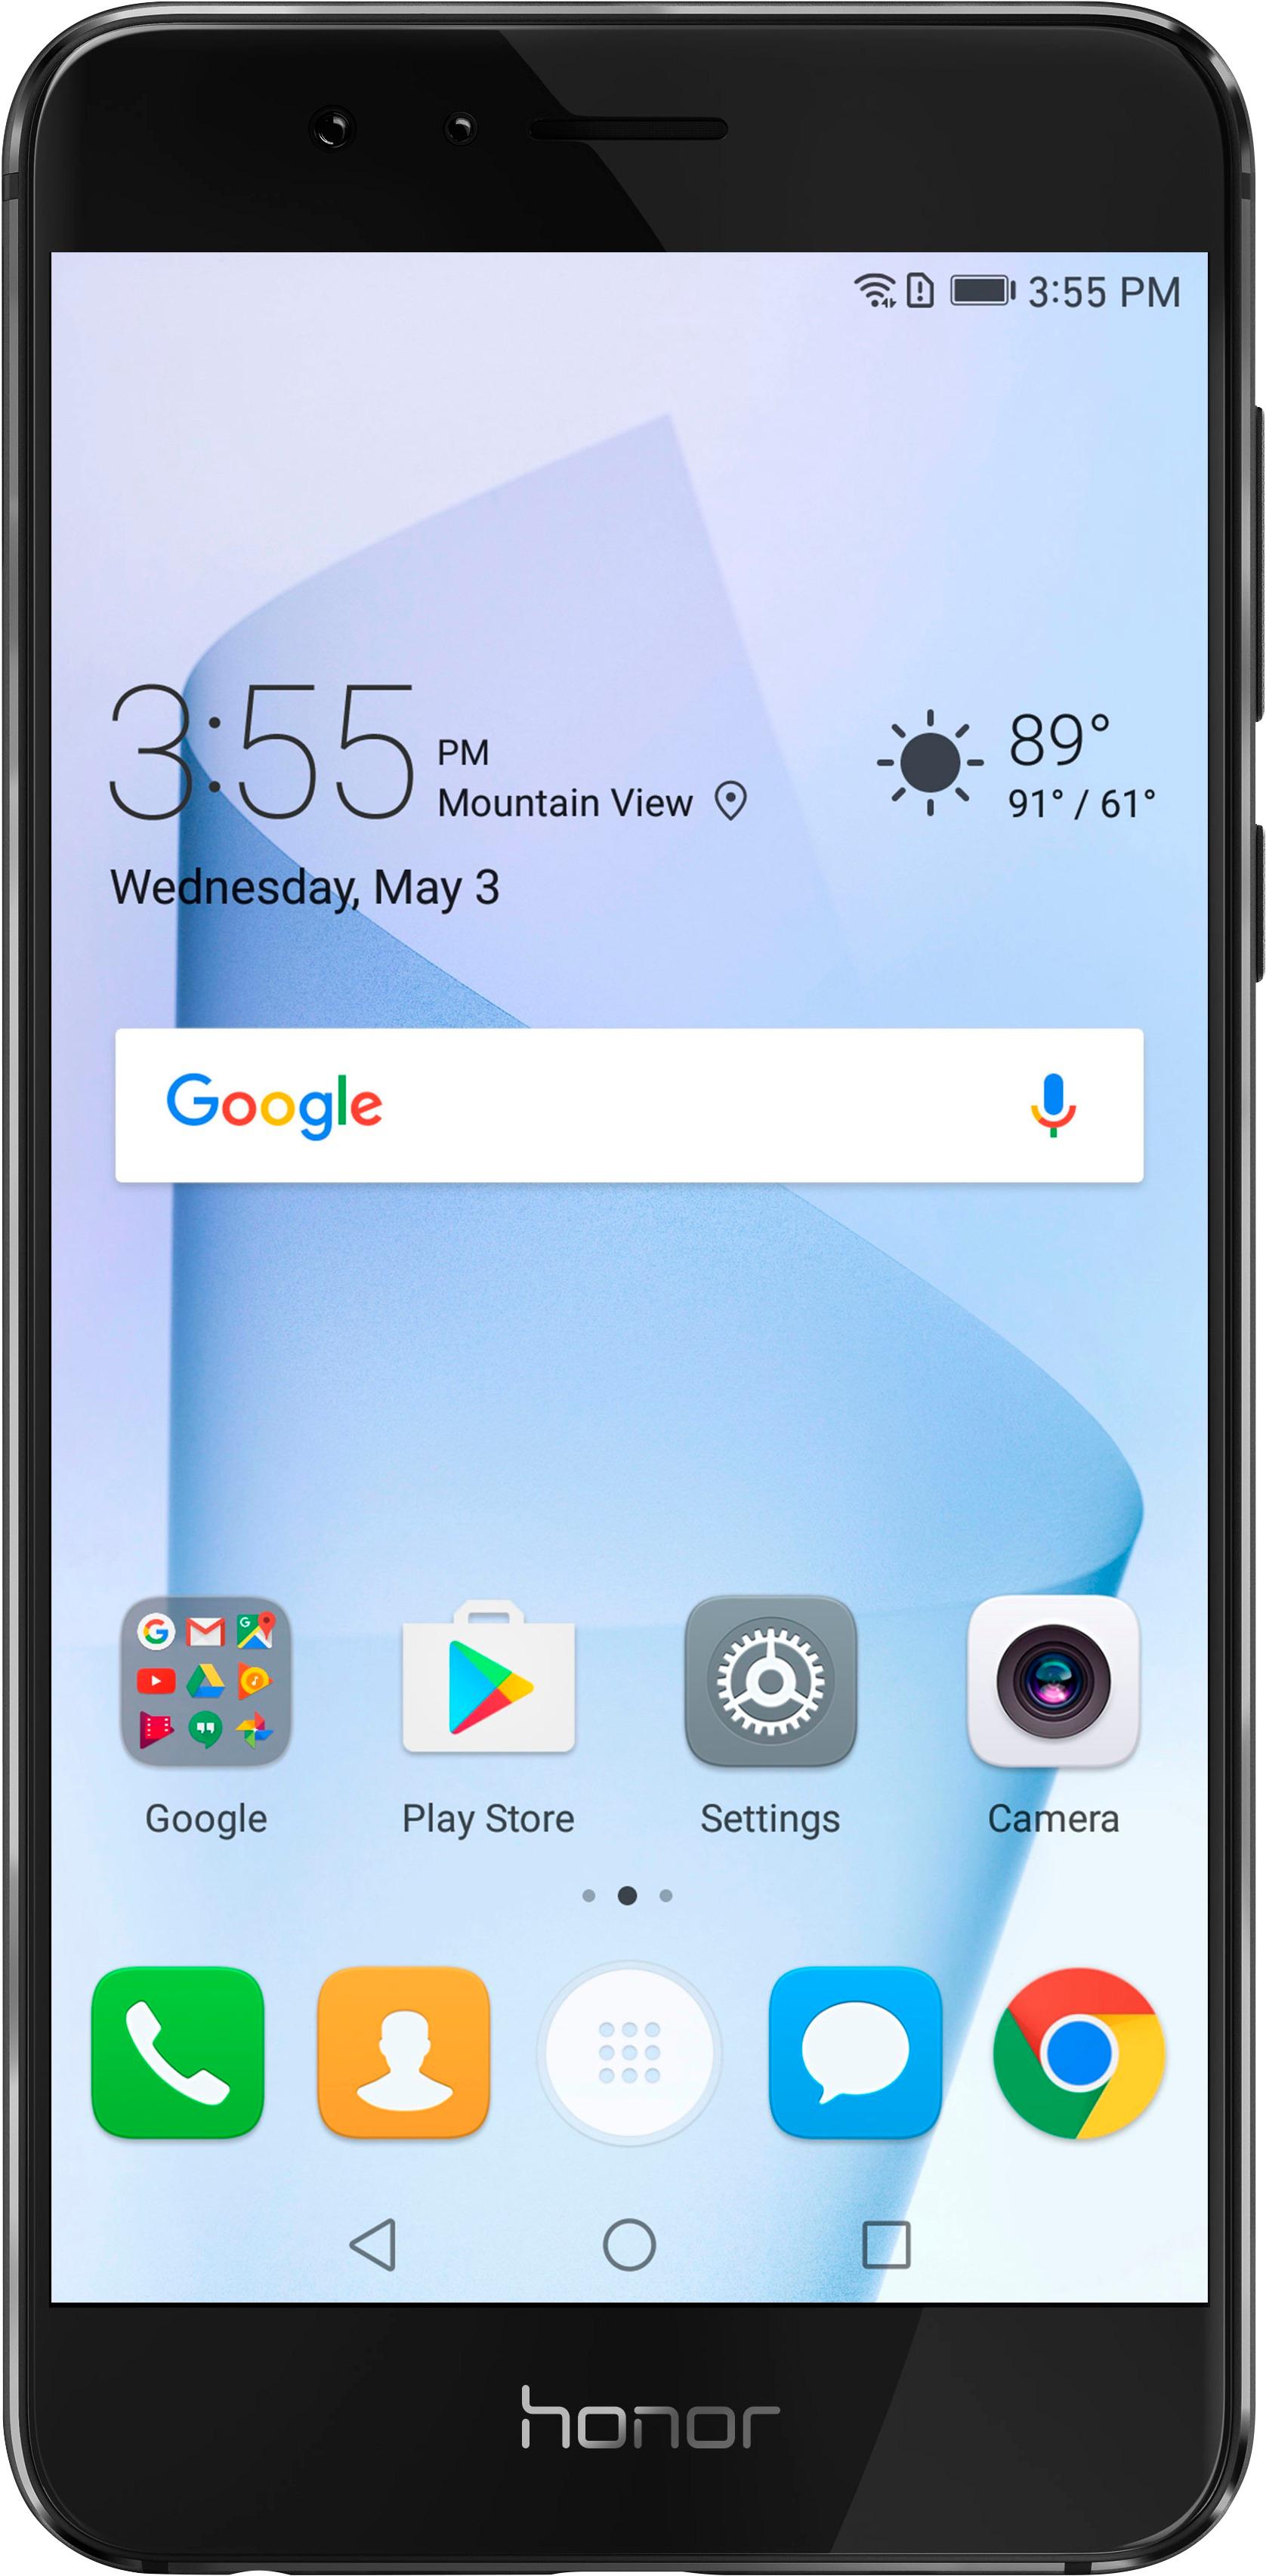 Waterig kever vasthoudend Best Buy: Huawei Honor 8 4G LTE with 32GB Memory Cell Phone (Unlocked)  Midnight black FRD-L04